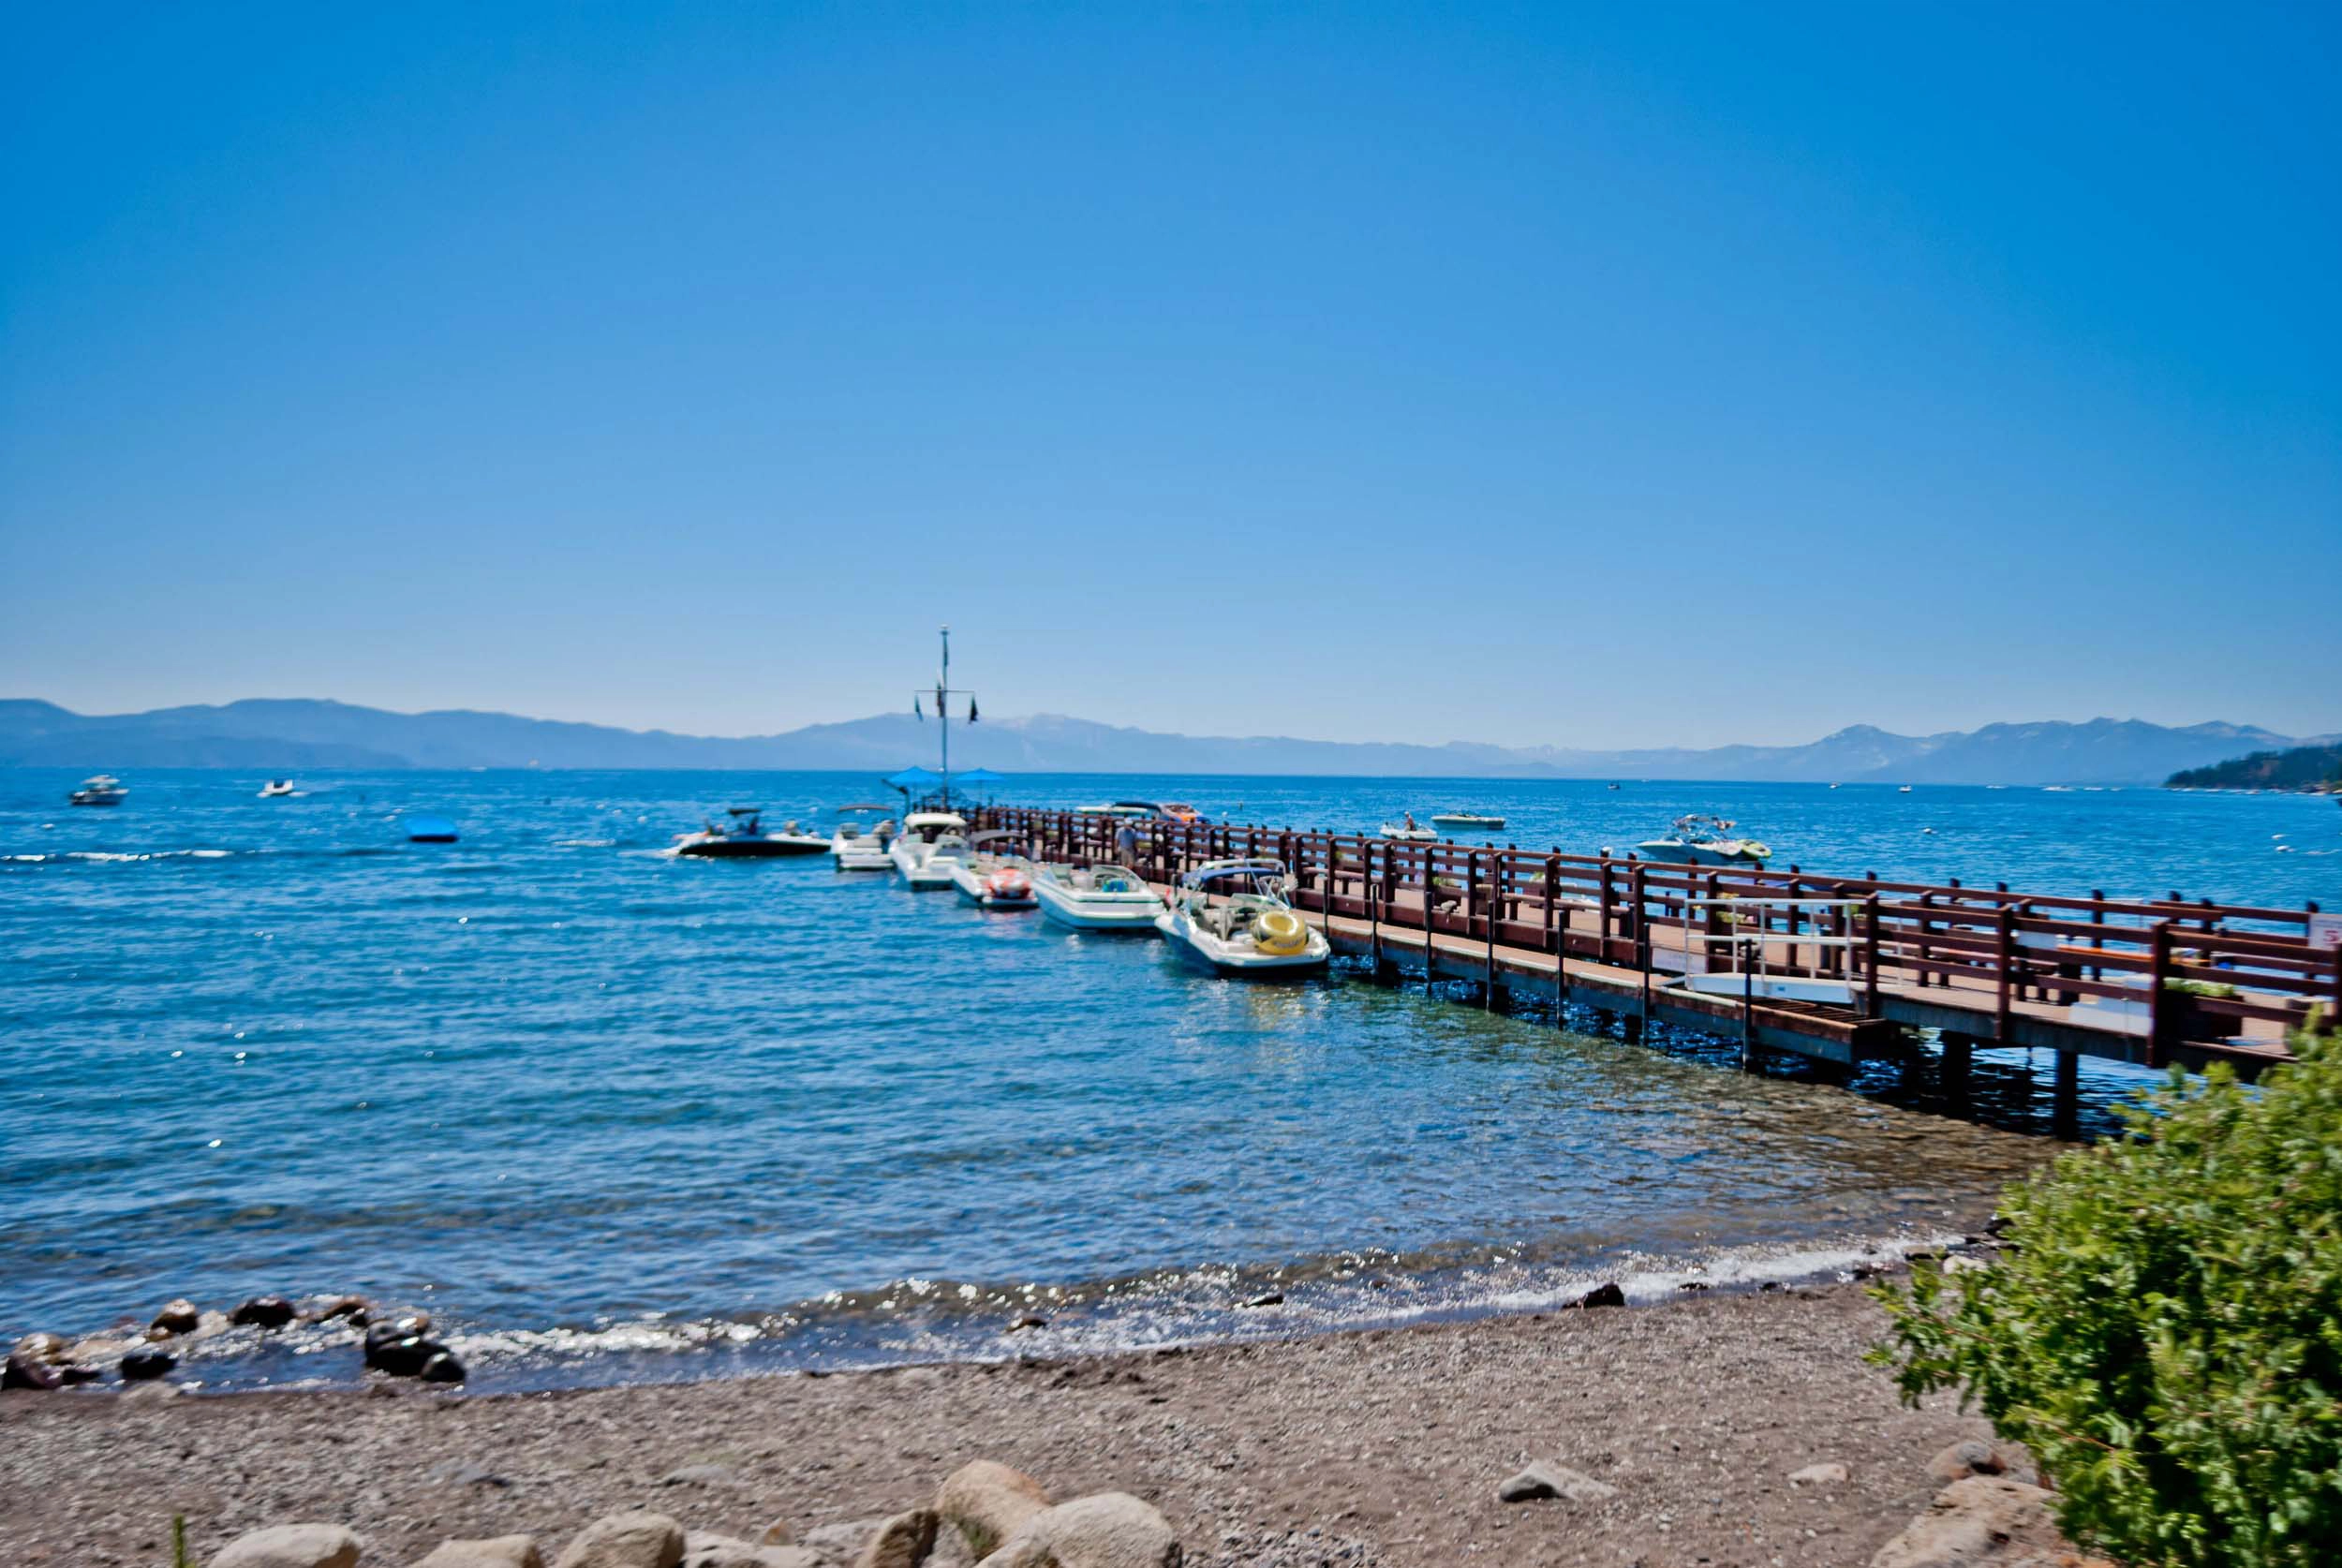 Lake Tahoe Beaches: Boat Dock, 2012 Copyright Christine Hull, Windy Pinwheel things to do in reno with kids